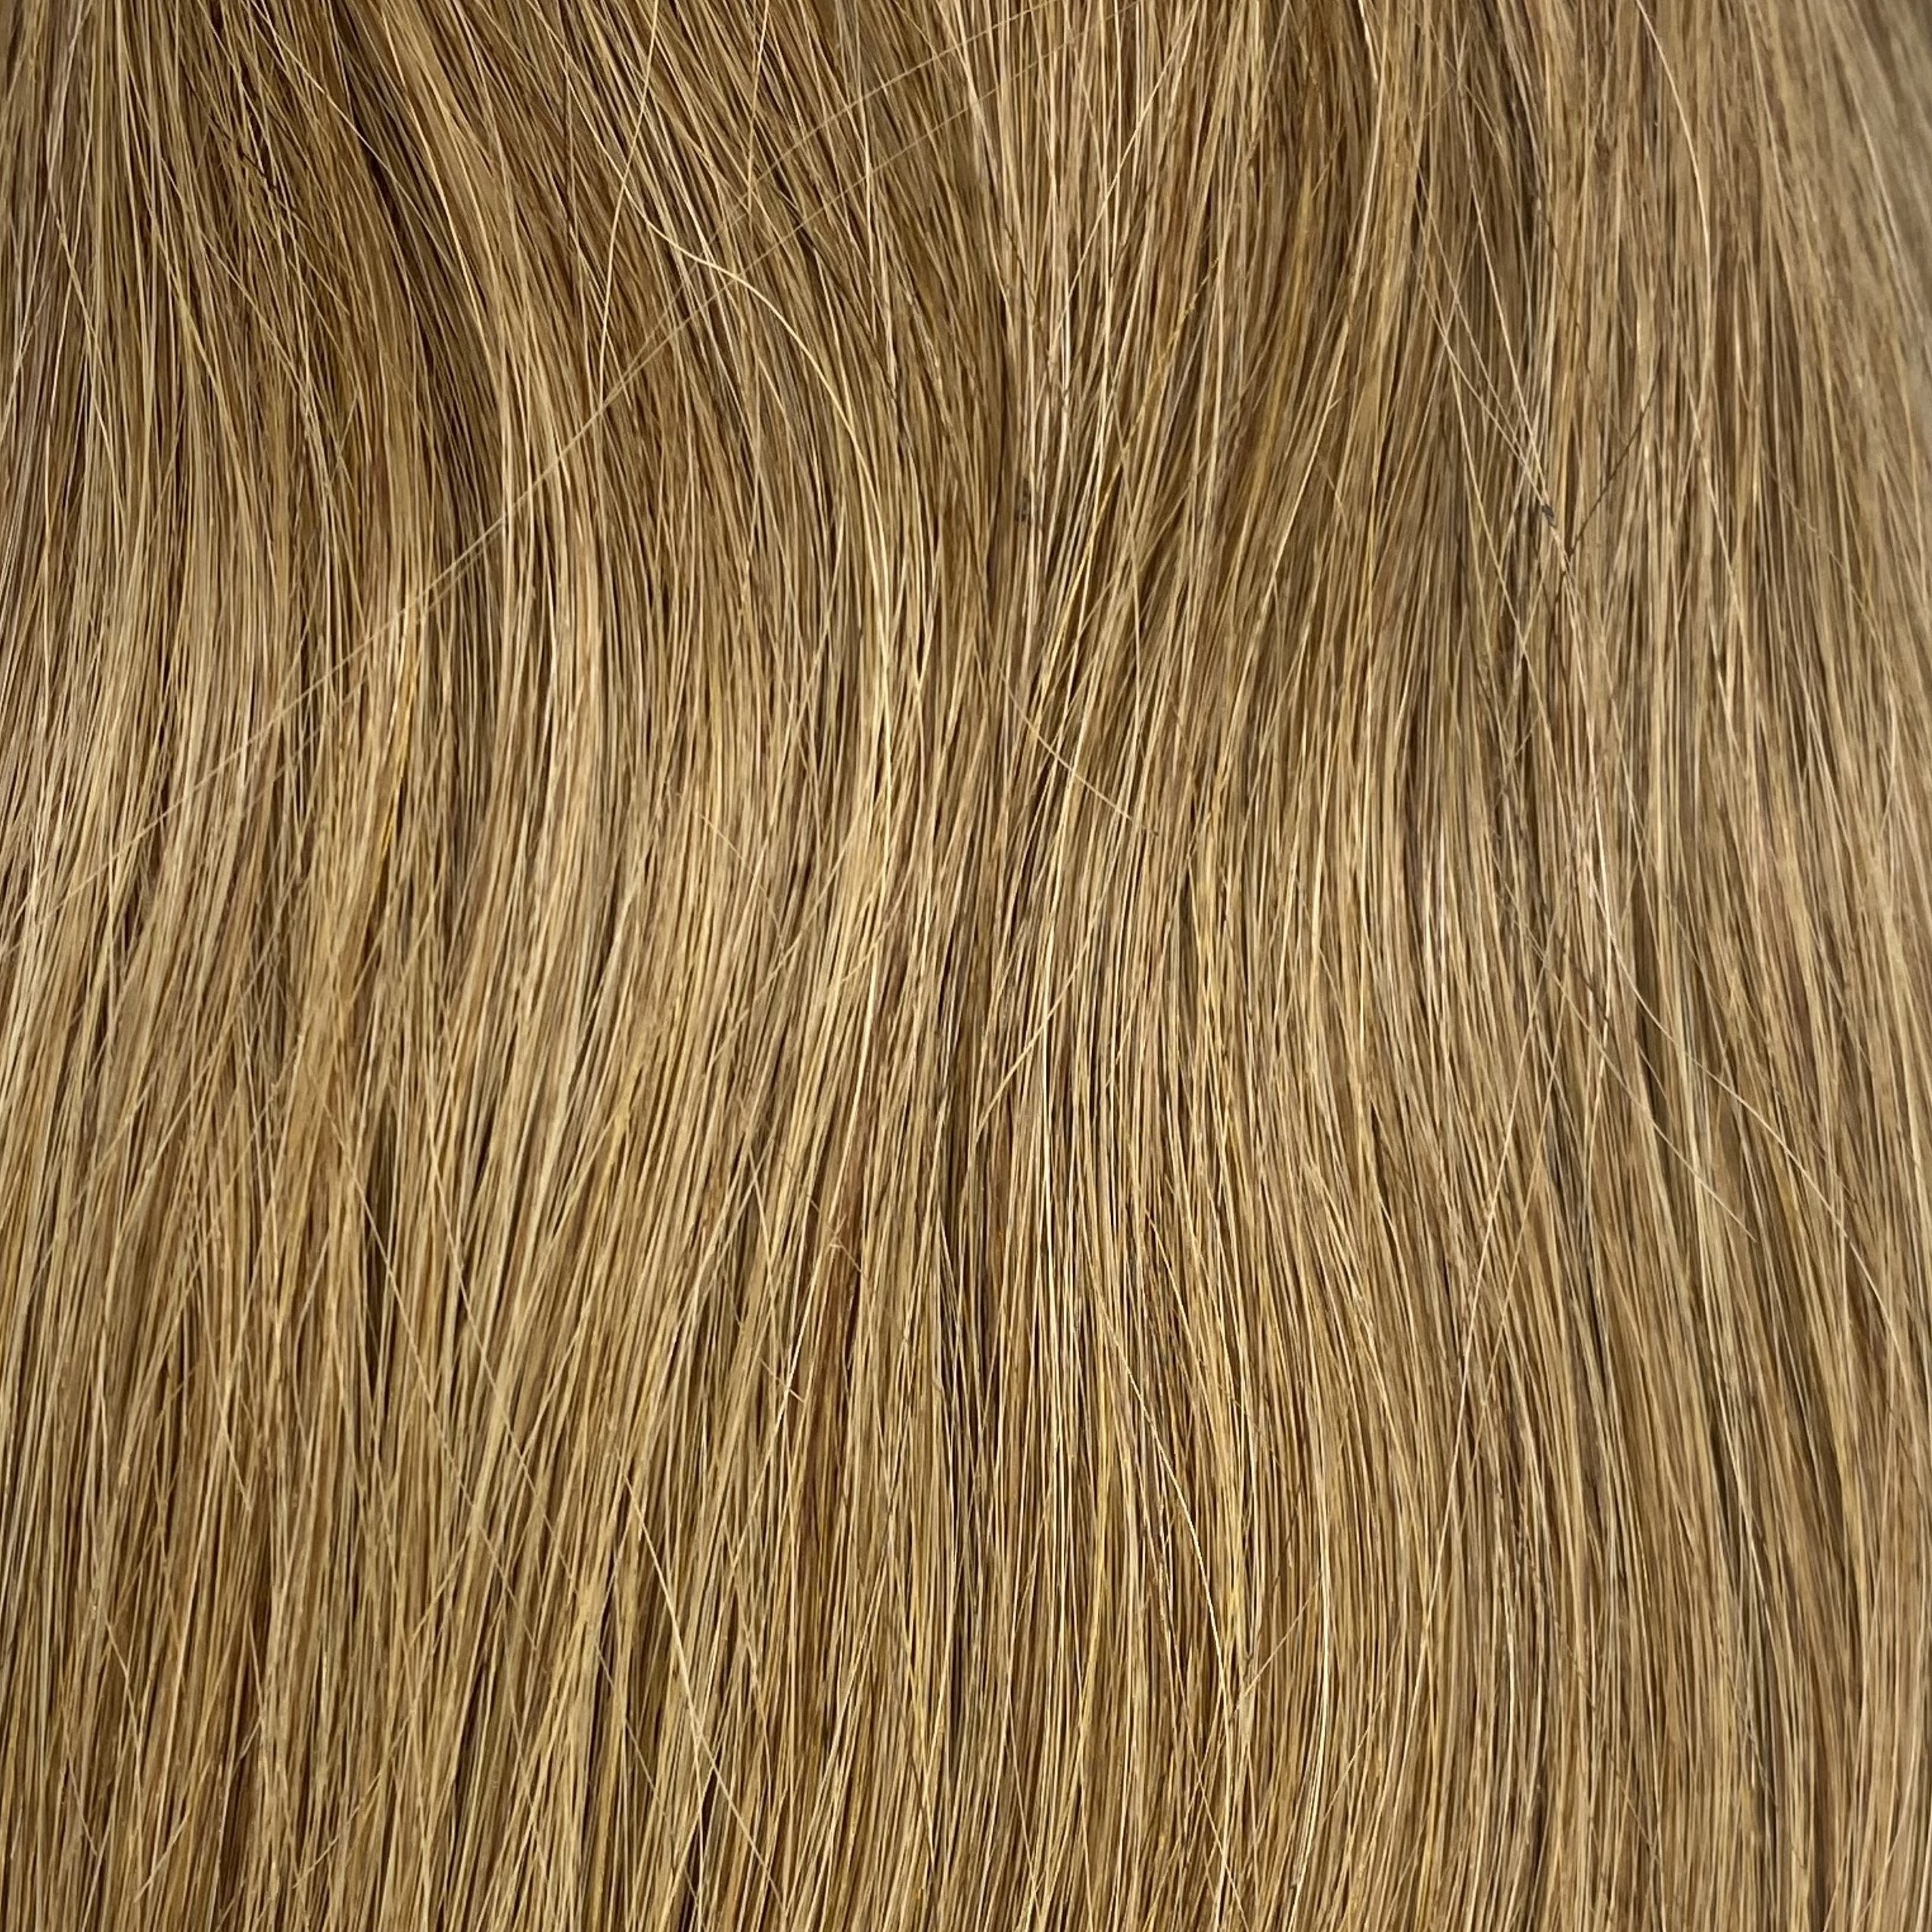 Velo Sale #8 - 16 inches - Dark Blonde